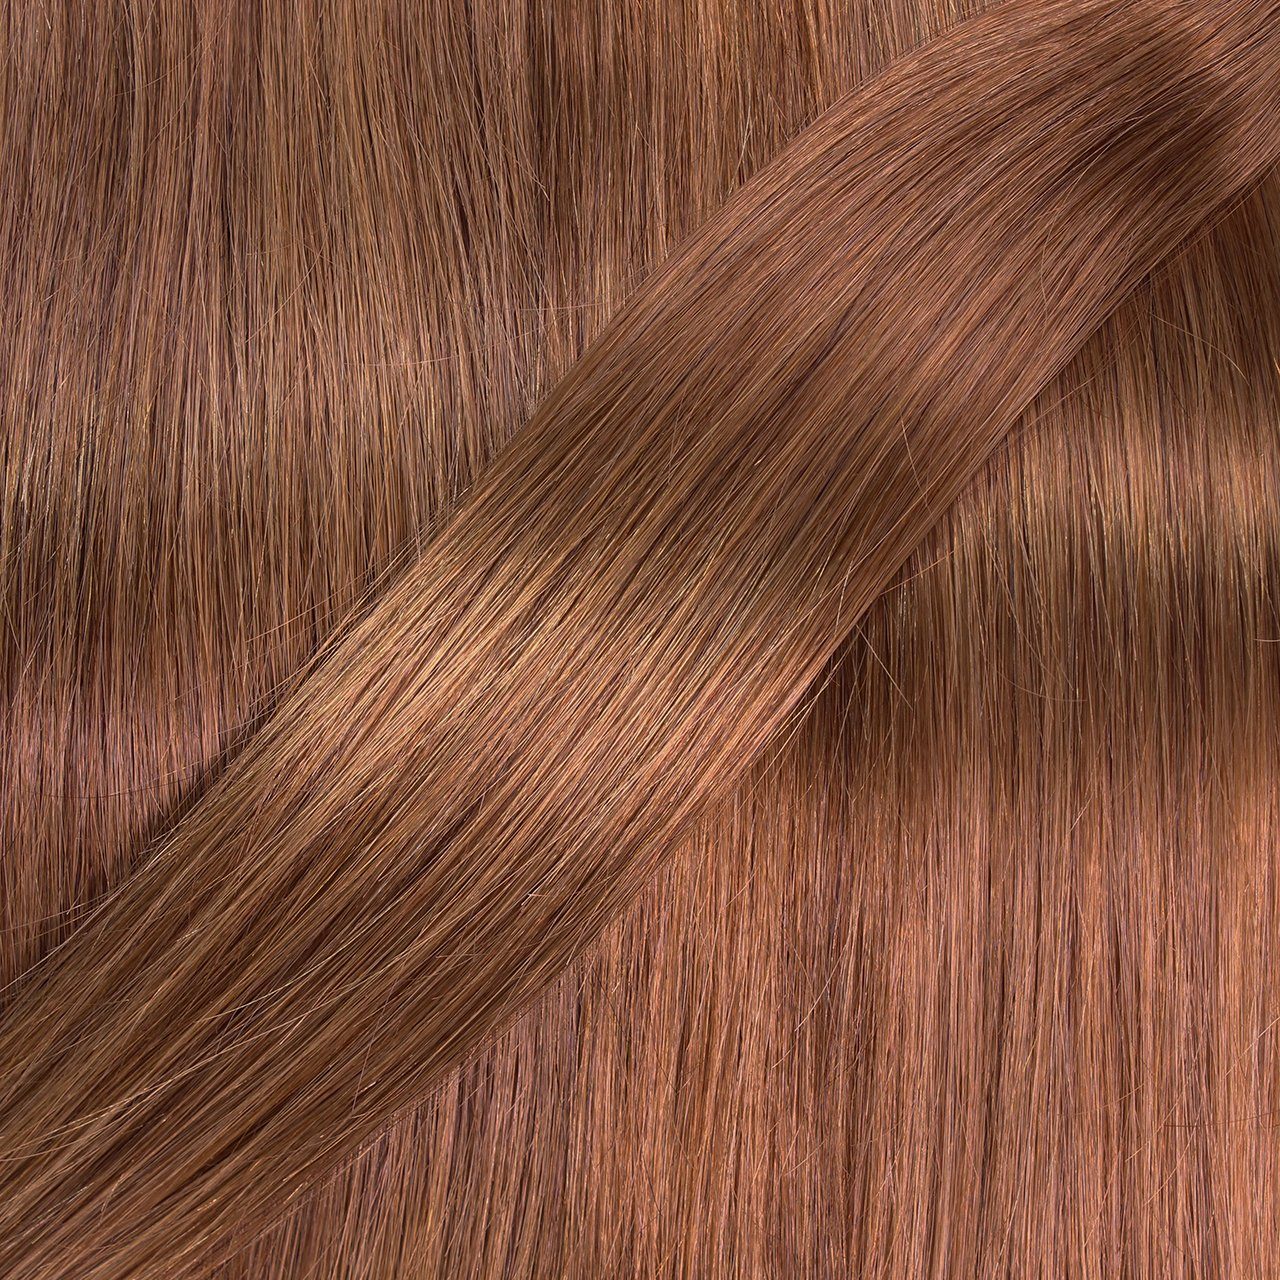 hair2heart Echthaar-Extension Loops 0.5g Hellblond 40cm glatt - Natur-Gold #8/03 Microring